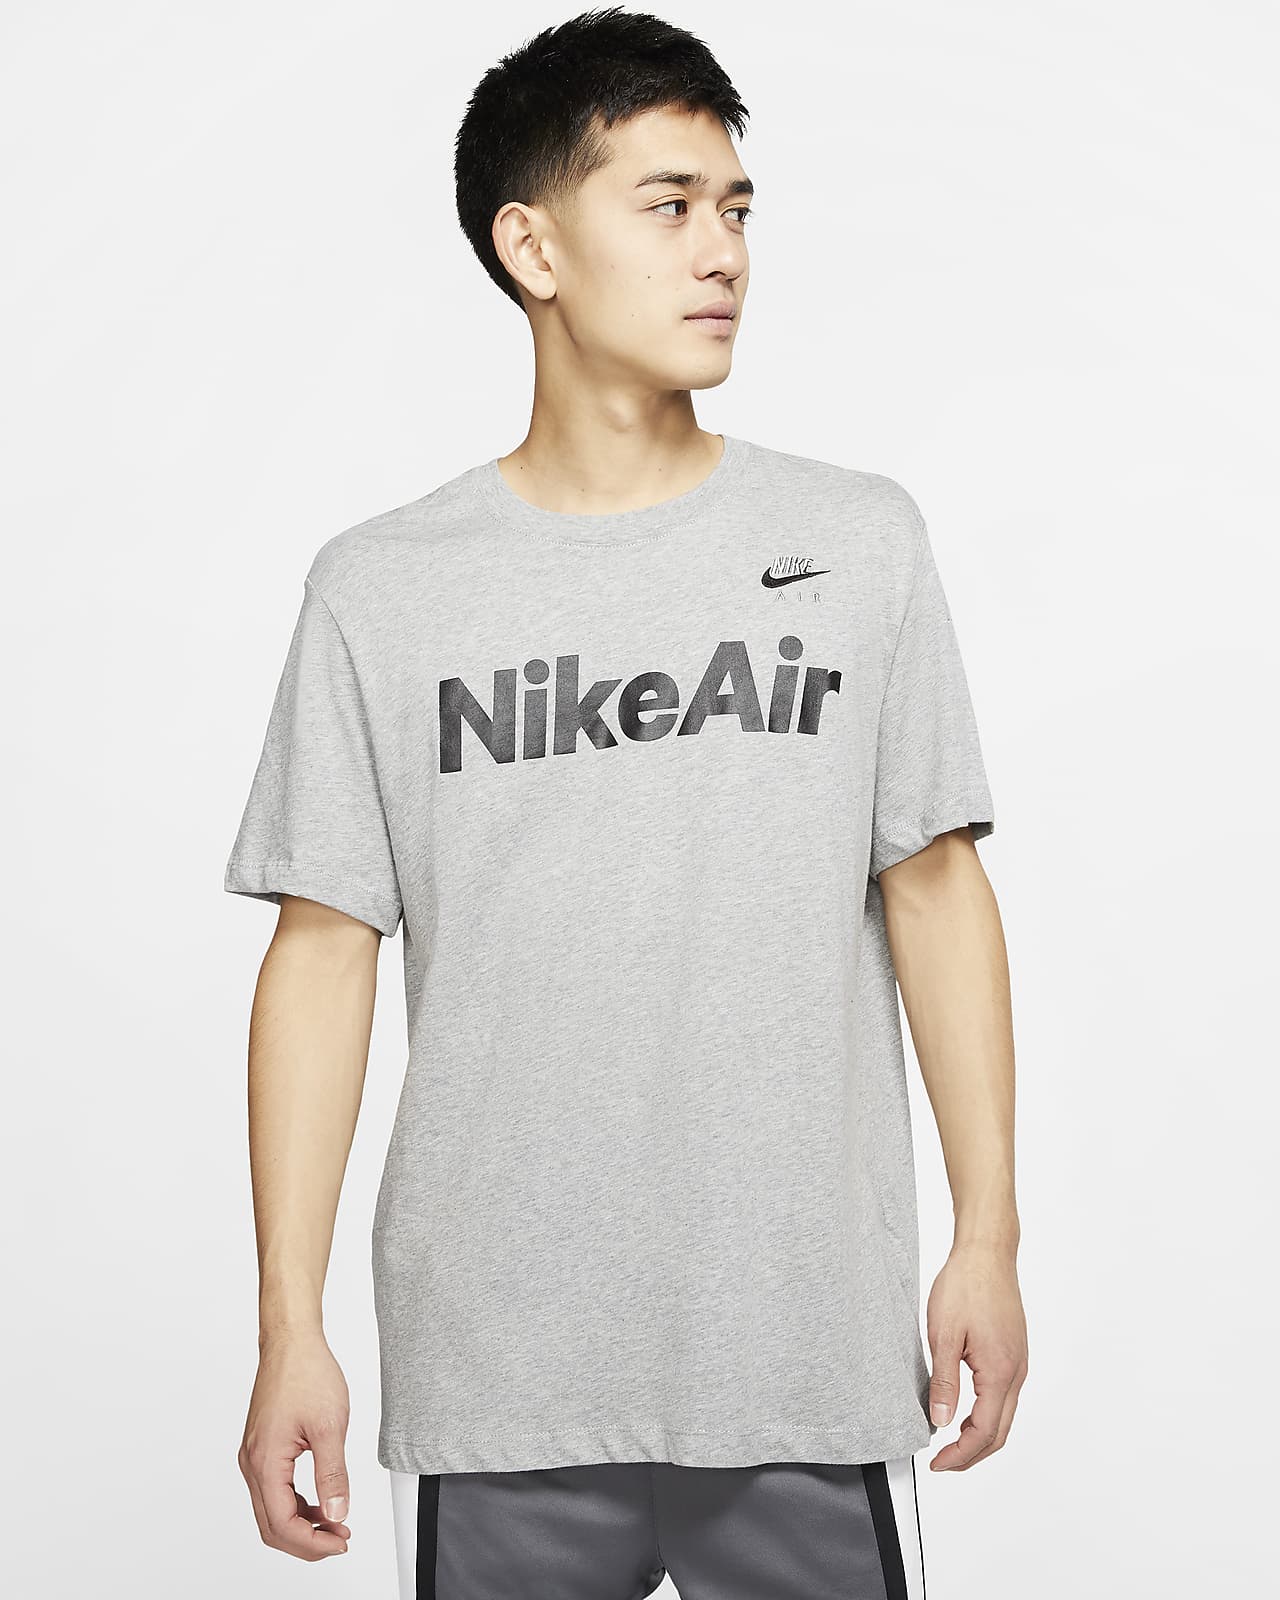 T-shirt Nike Air - Uomo